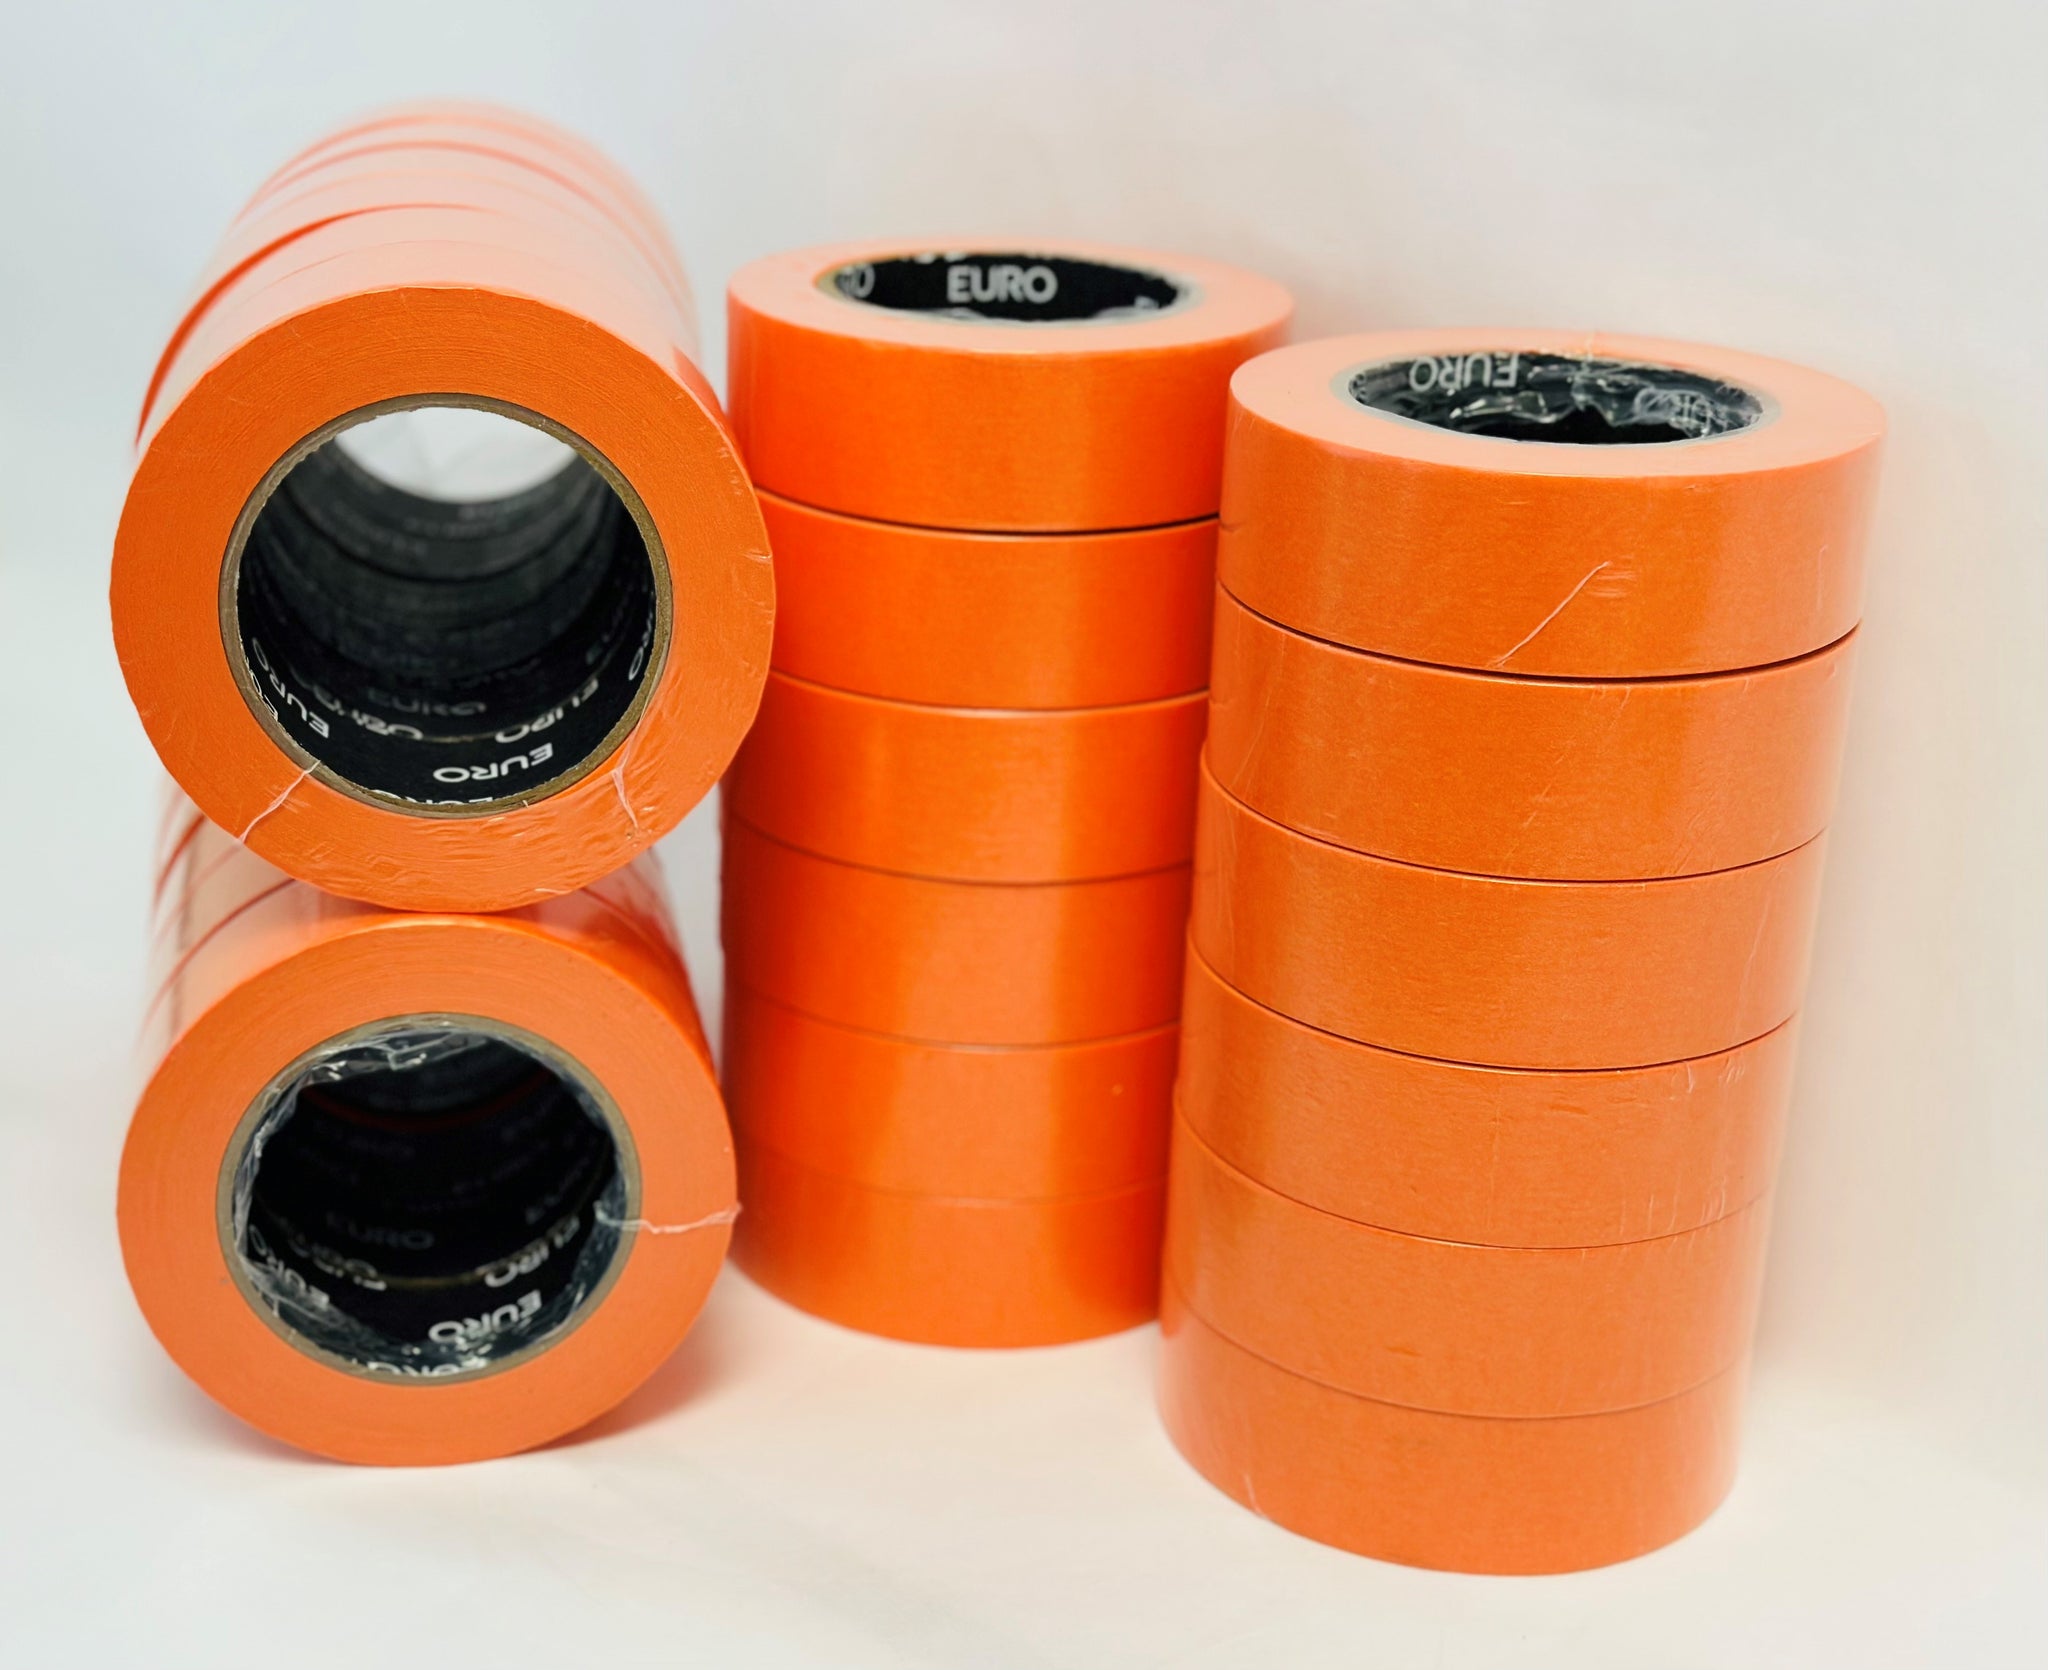  CrafJet Orange Soft Tape Measure For Body